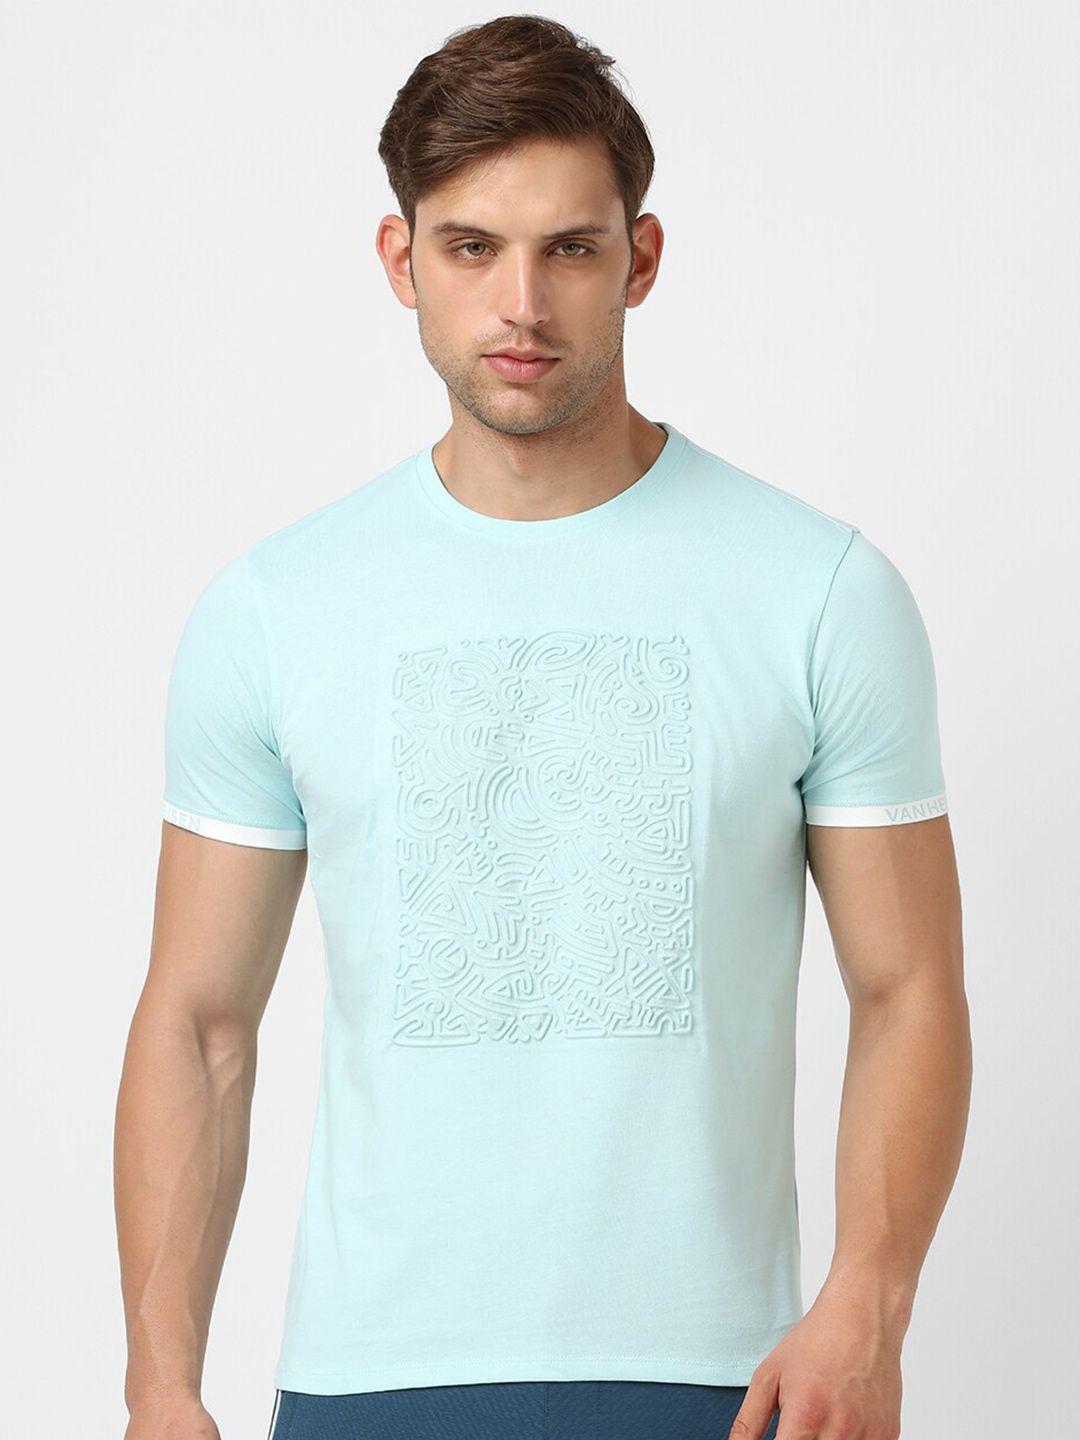 v dot graphic printed cotton t-shirt